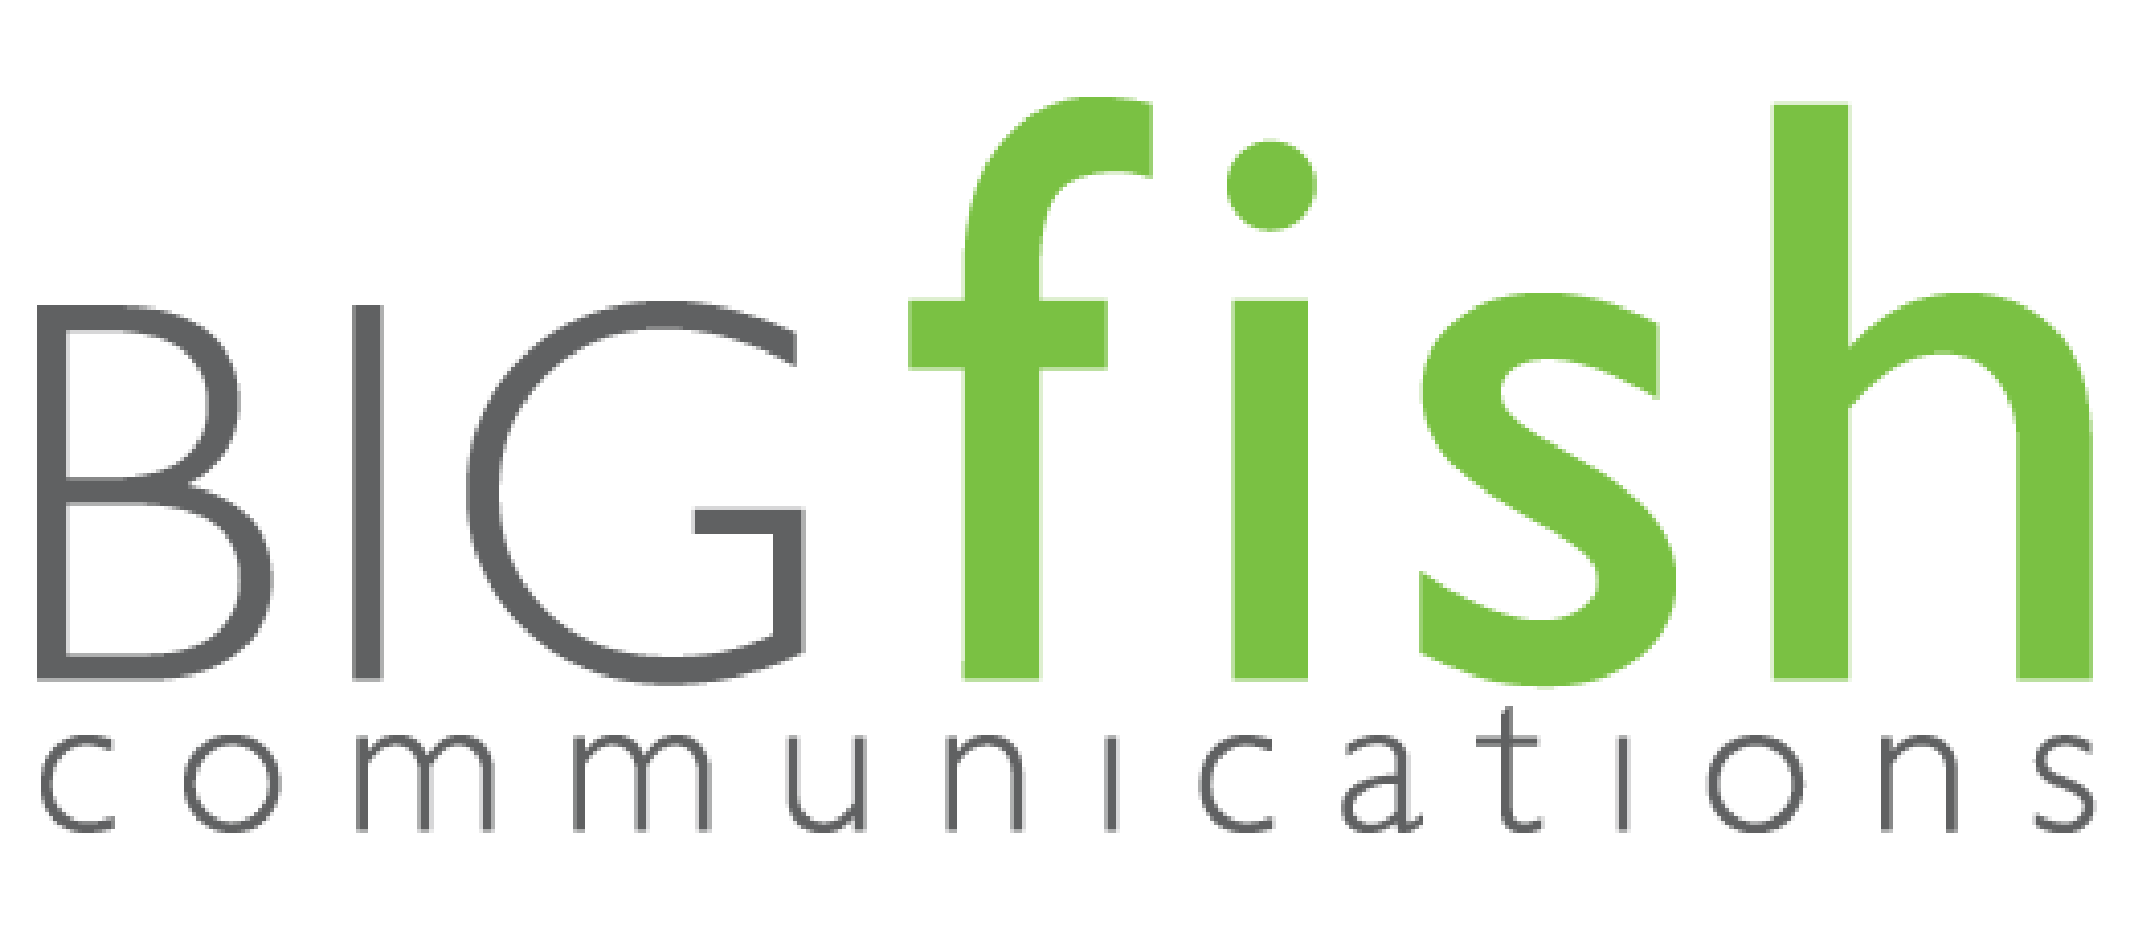 Bigfish Communications Logo